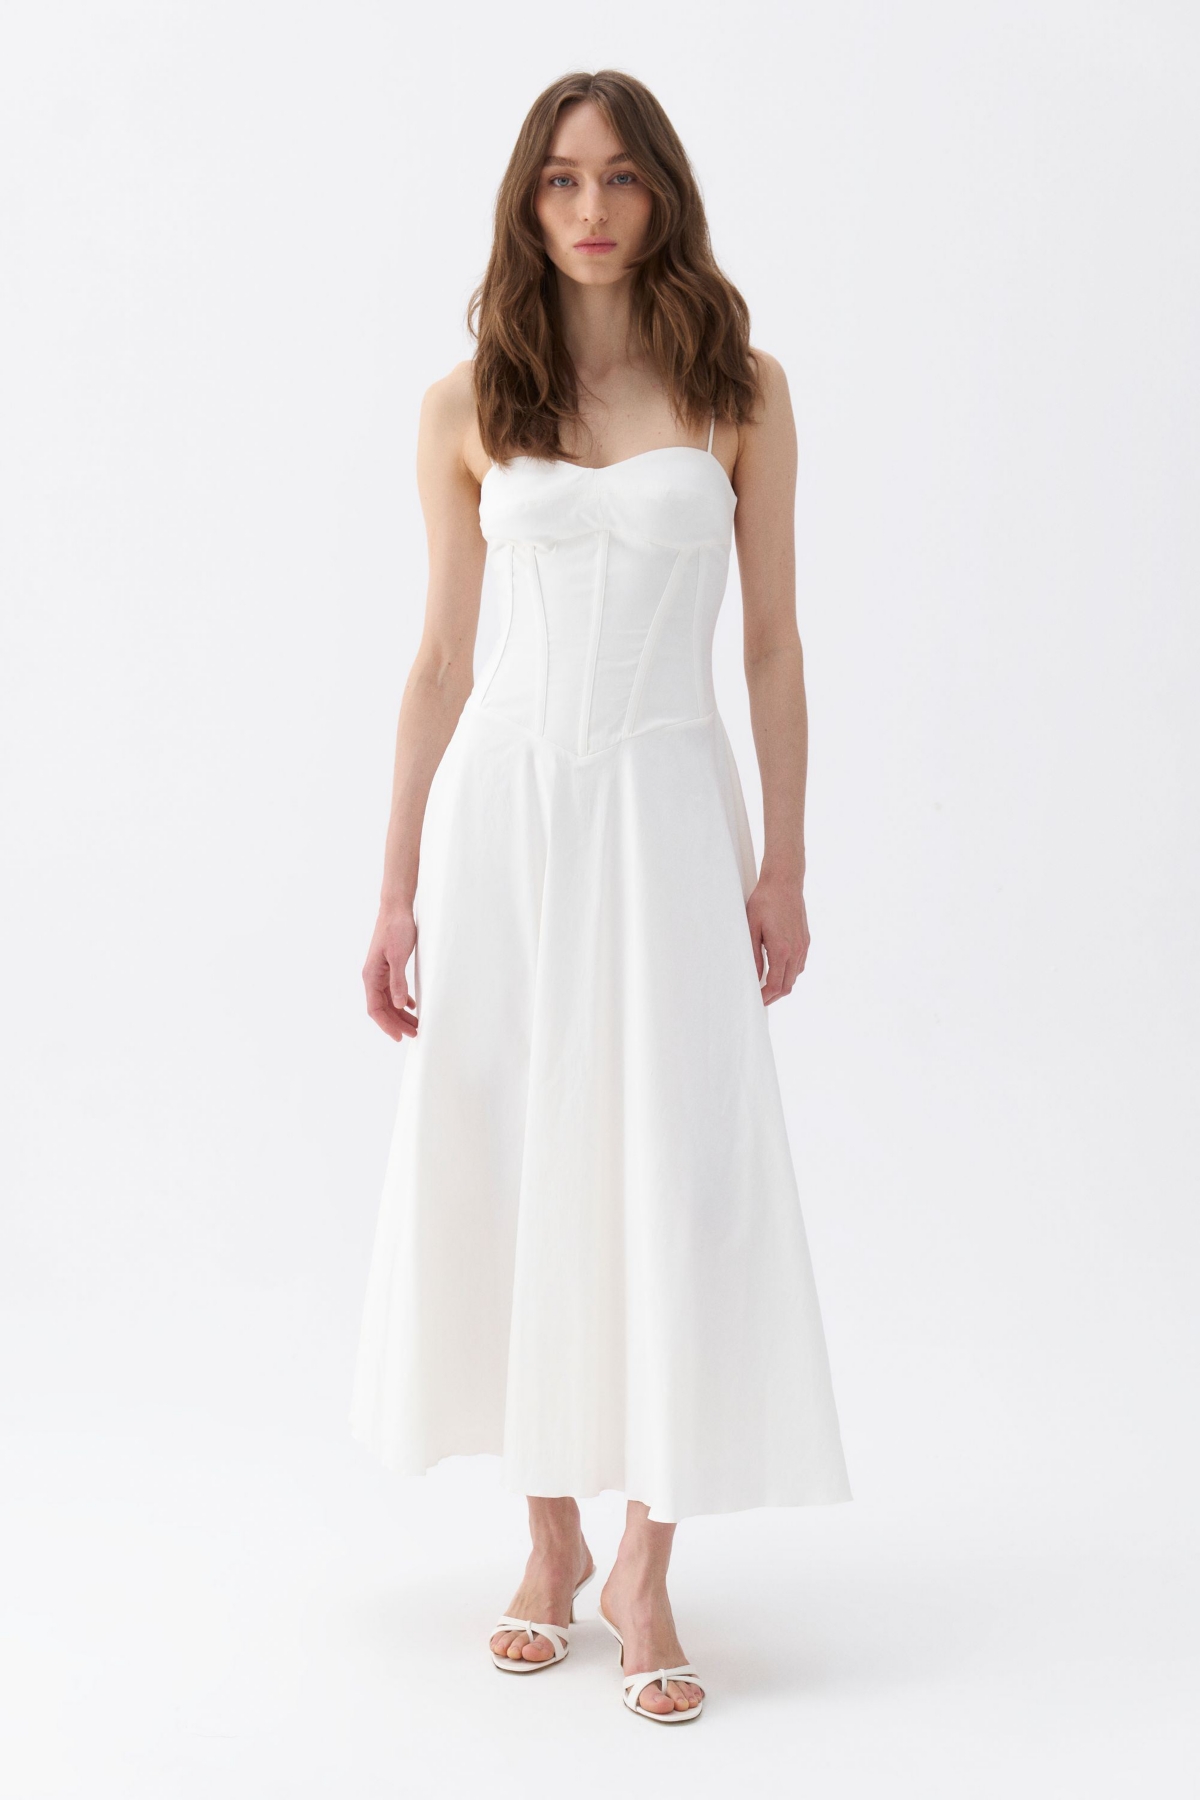 Women's Corset Detailed Dress - Open white